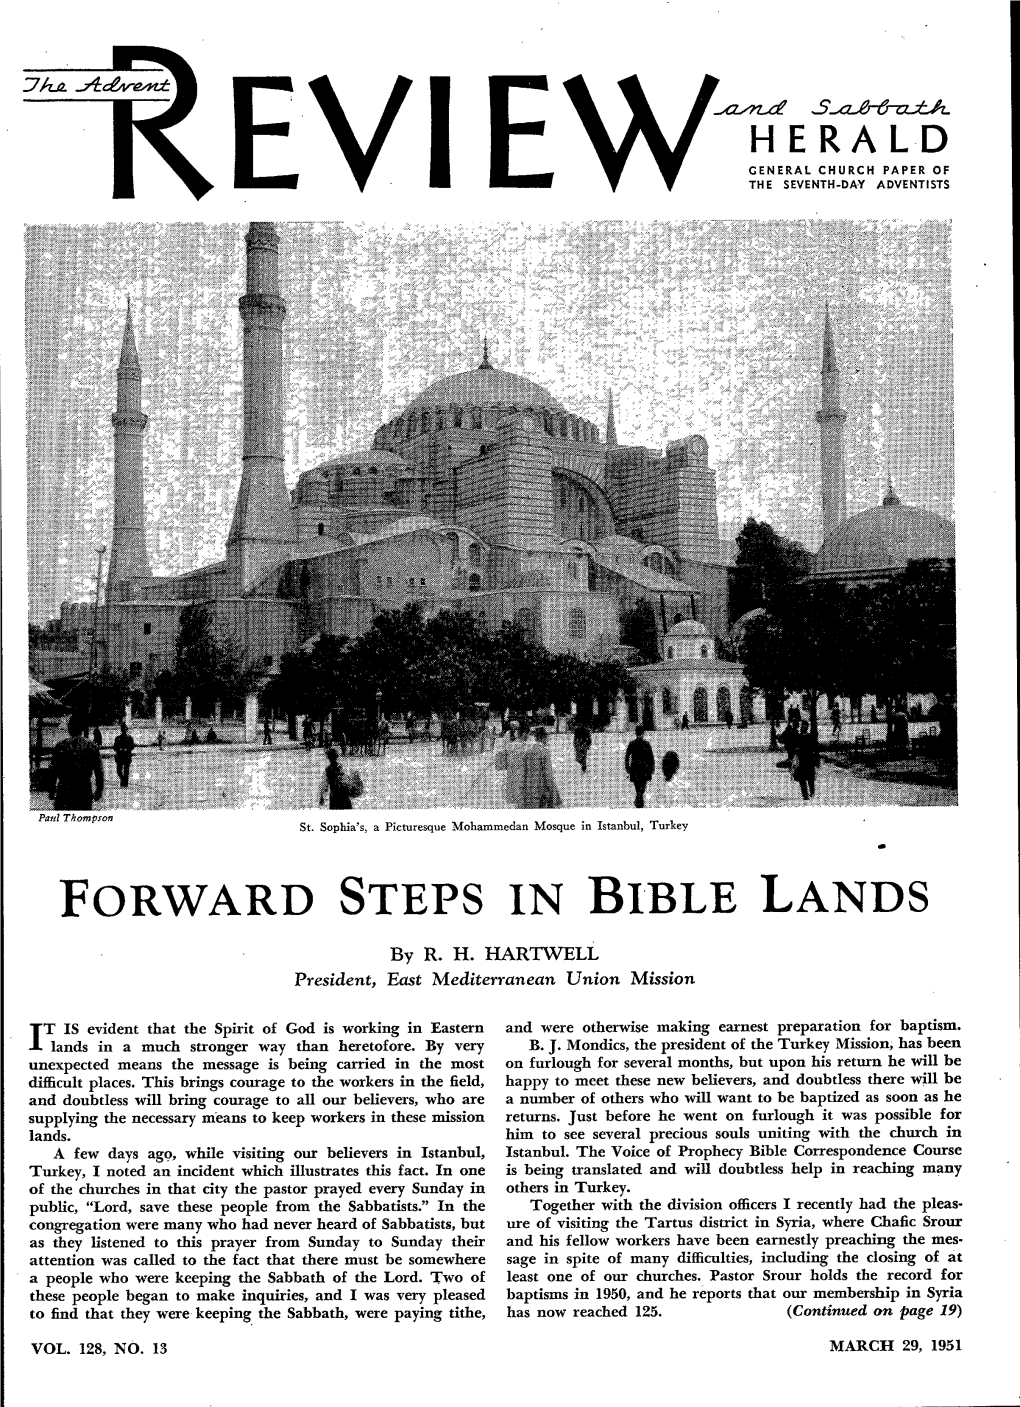 Forward Steps in Bible Lands